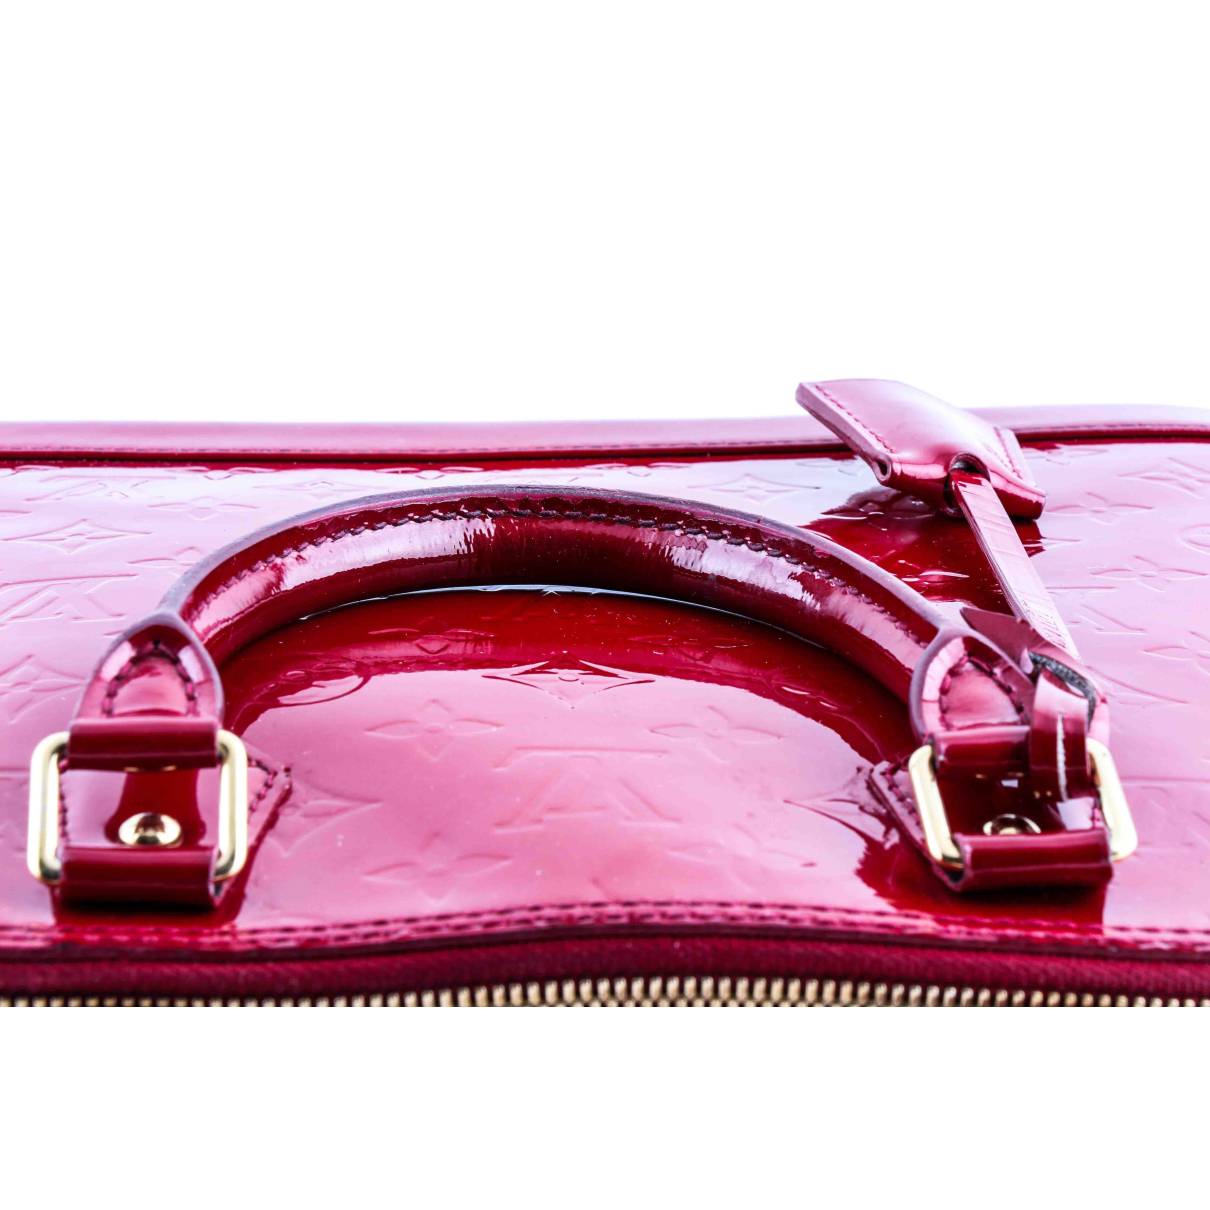 Louis Vuitton Alma Handbag Monogram Vernis GM Red